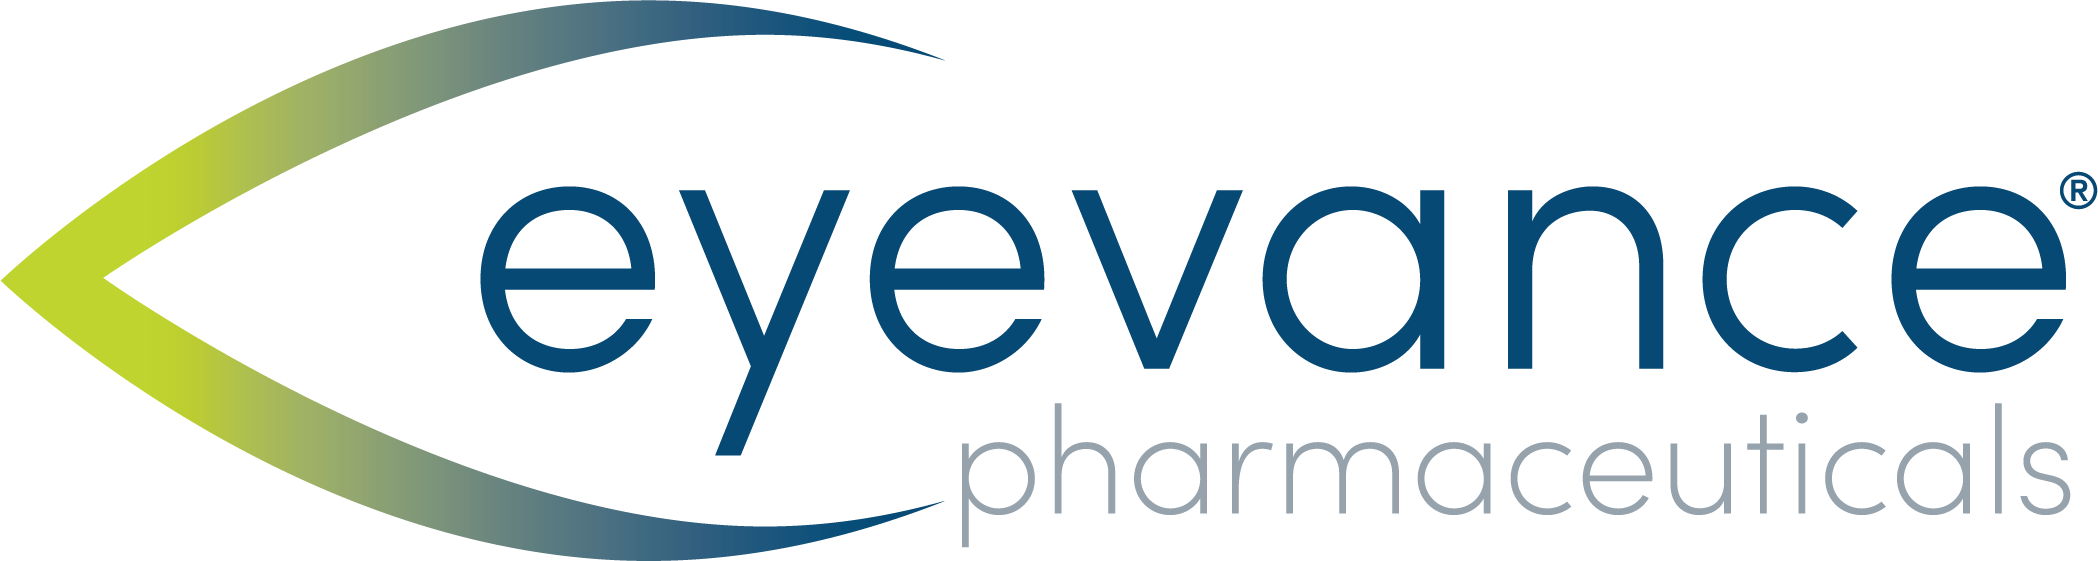 Eyevance Pharmaceuticals LLC